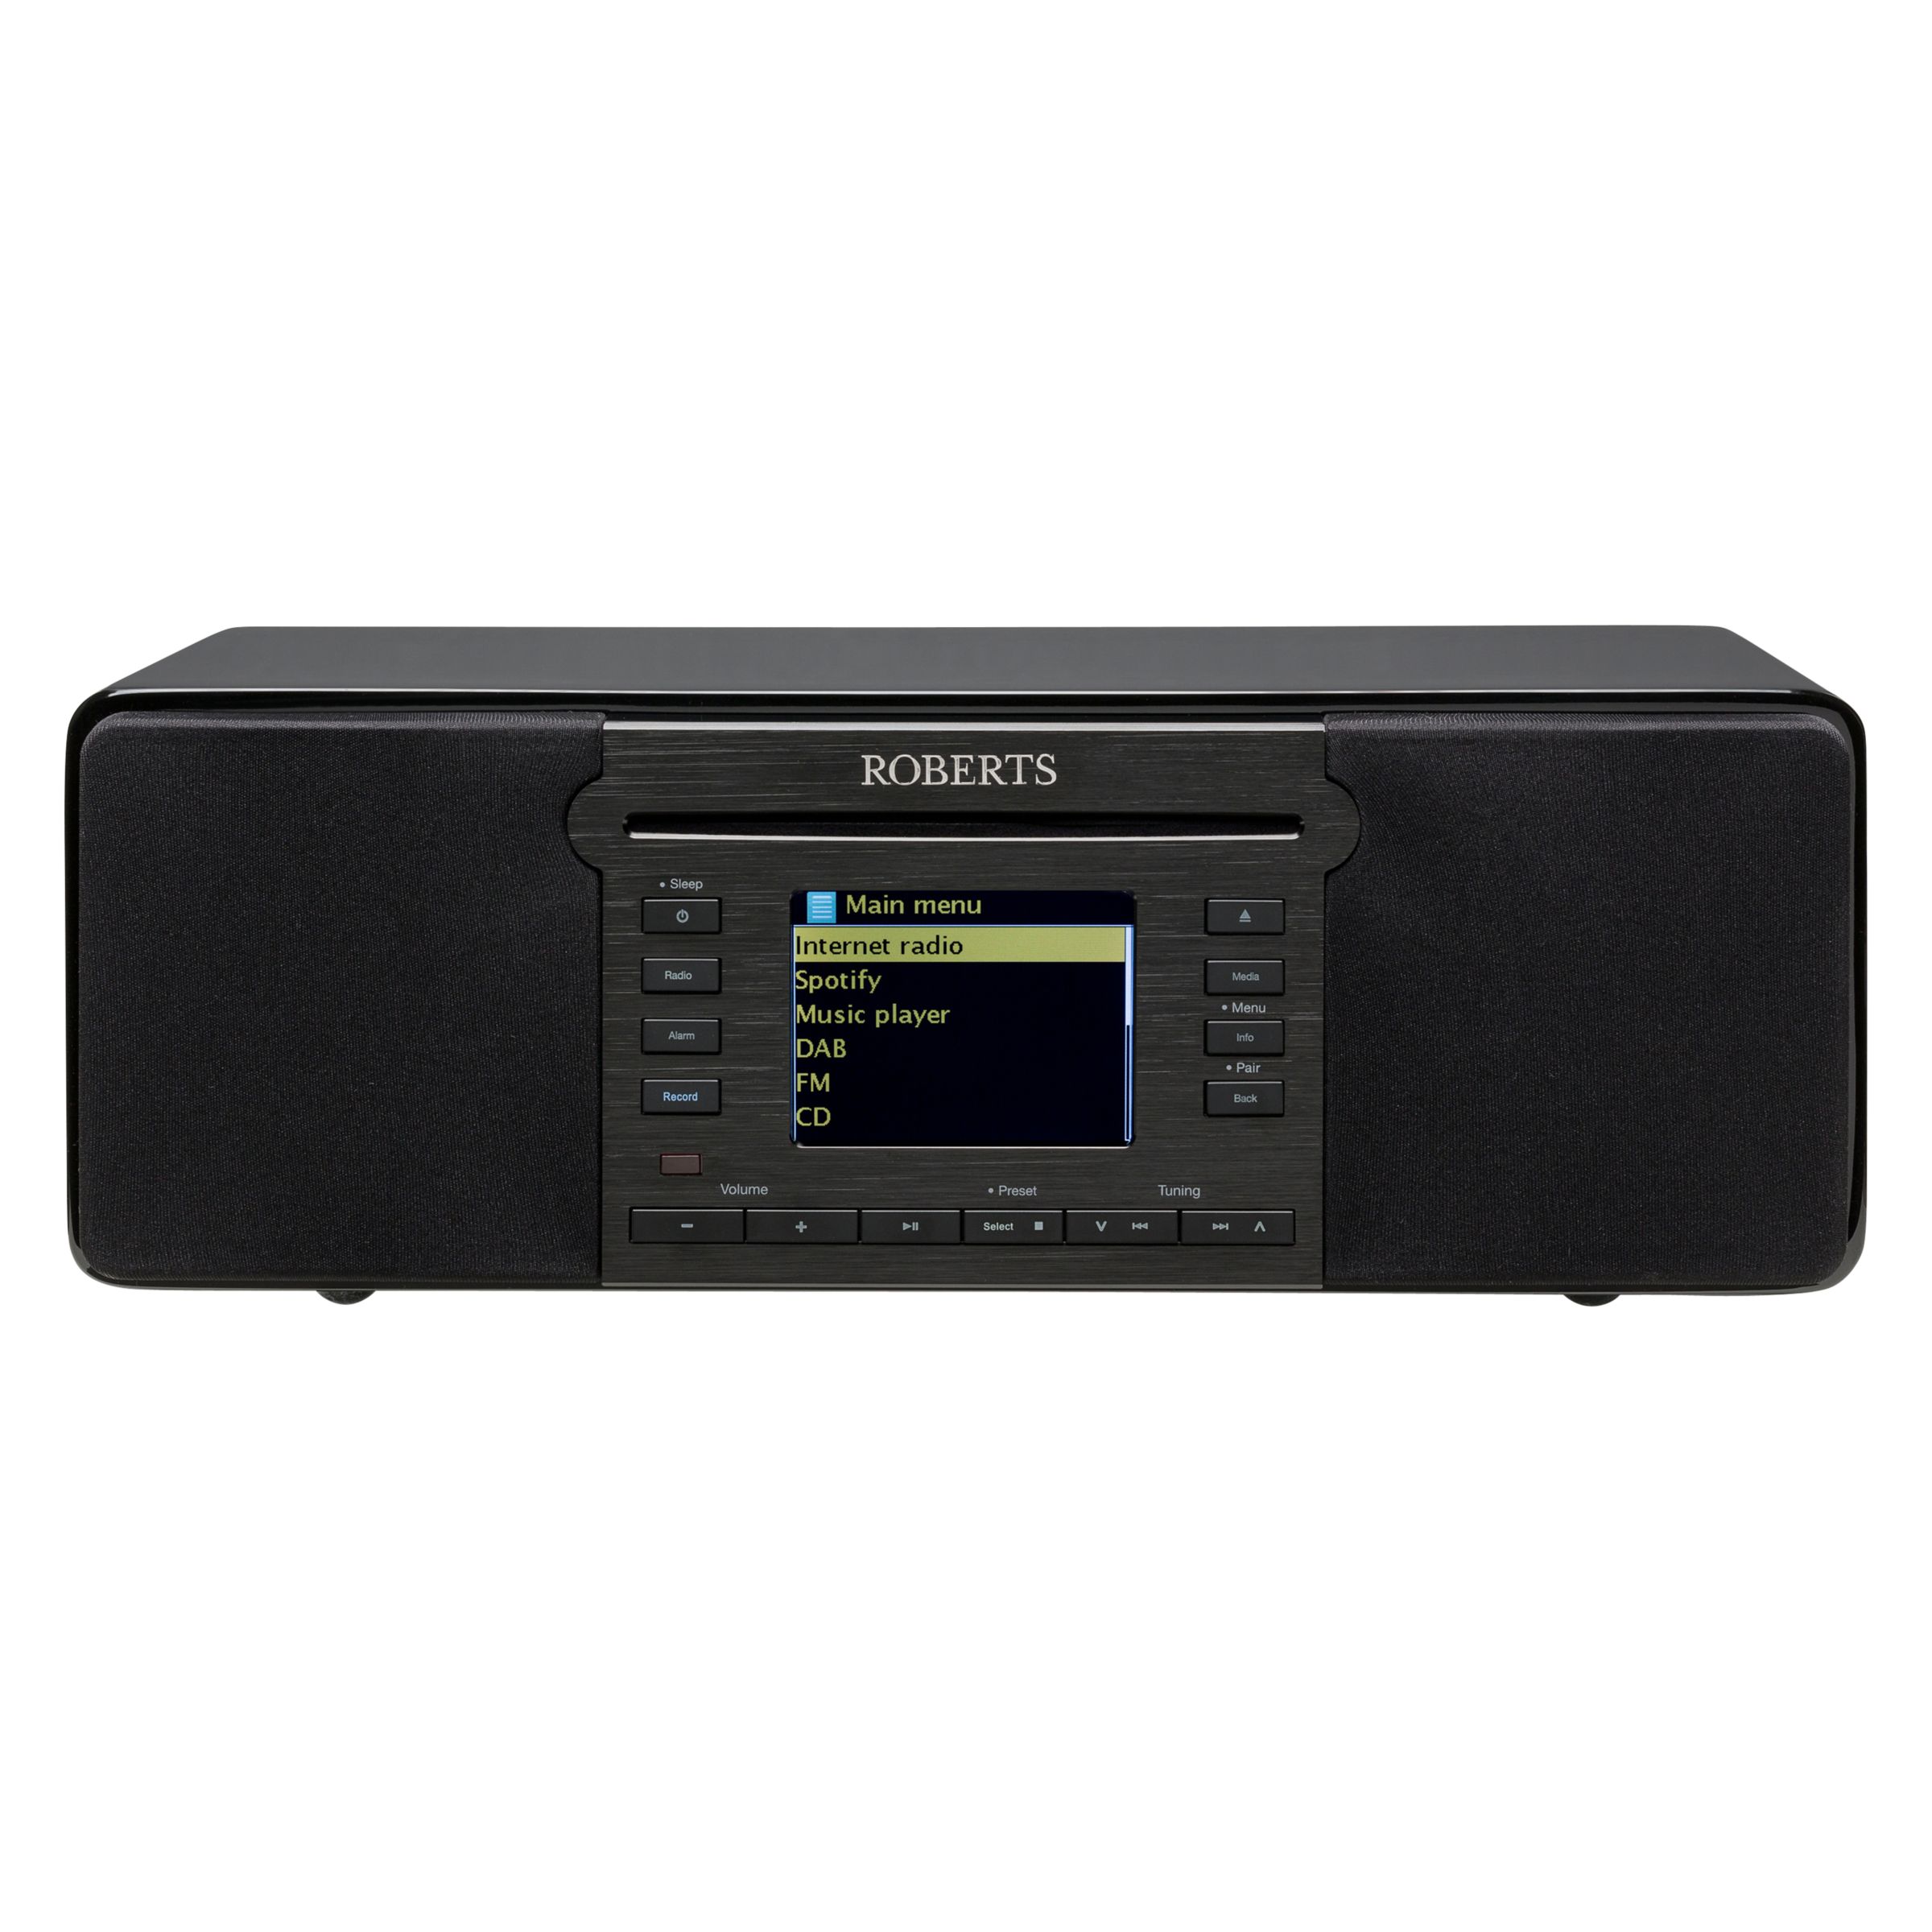 ROBERTS Stream 65i DAB+/FM CD Smart Multi-Room Radio With Wi-Fi, Bluetooth & Internet Radio